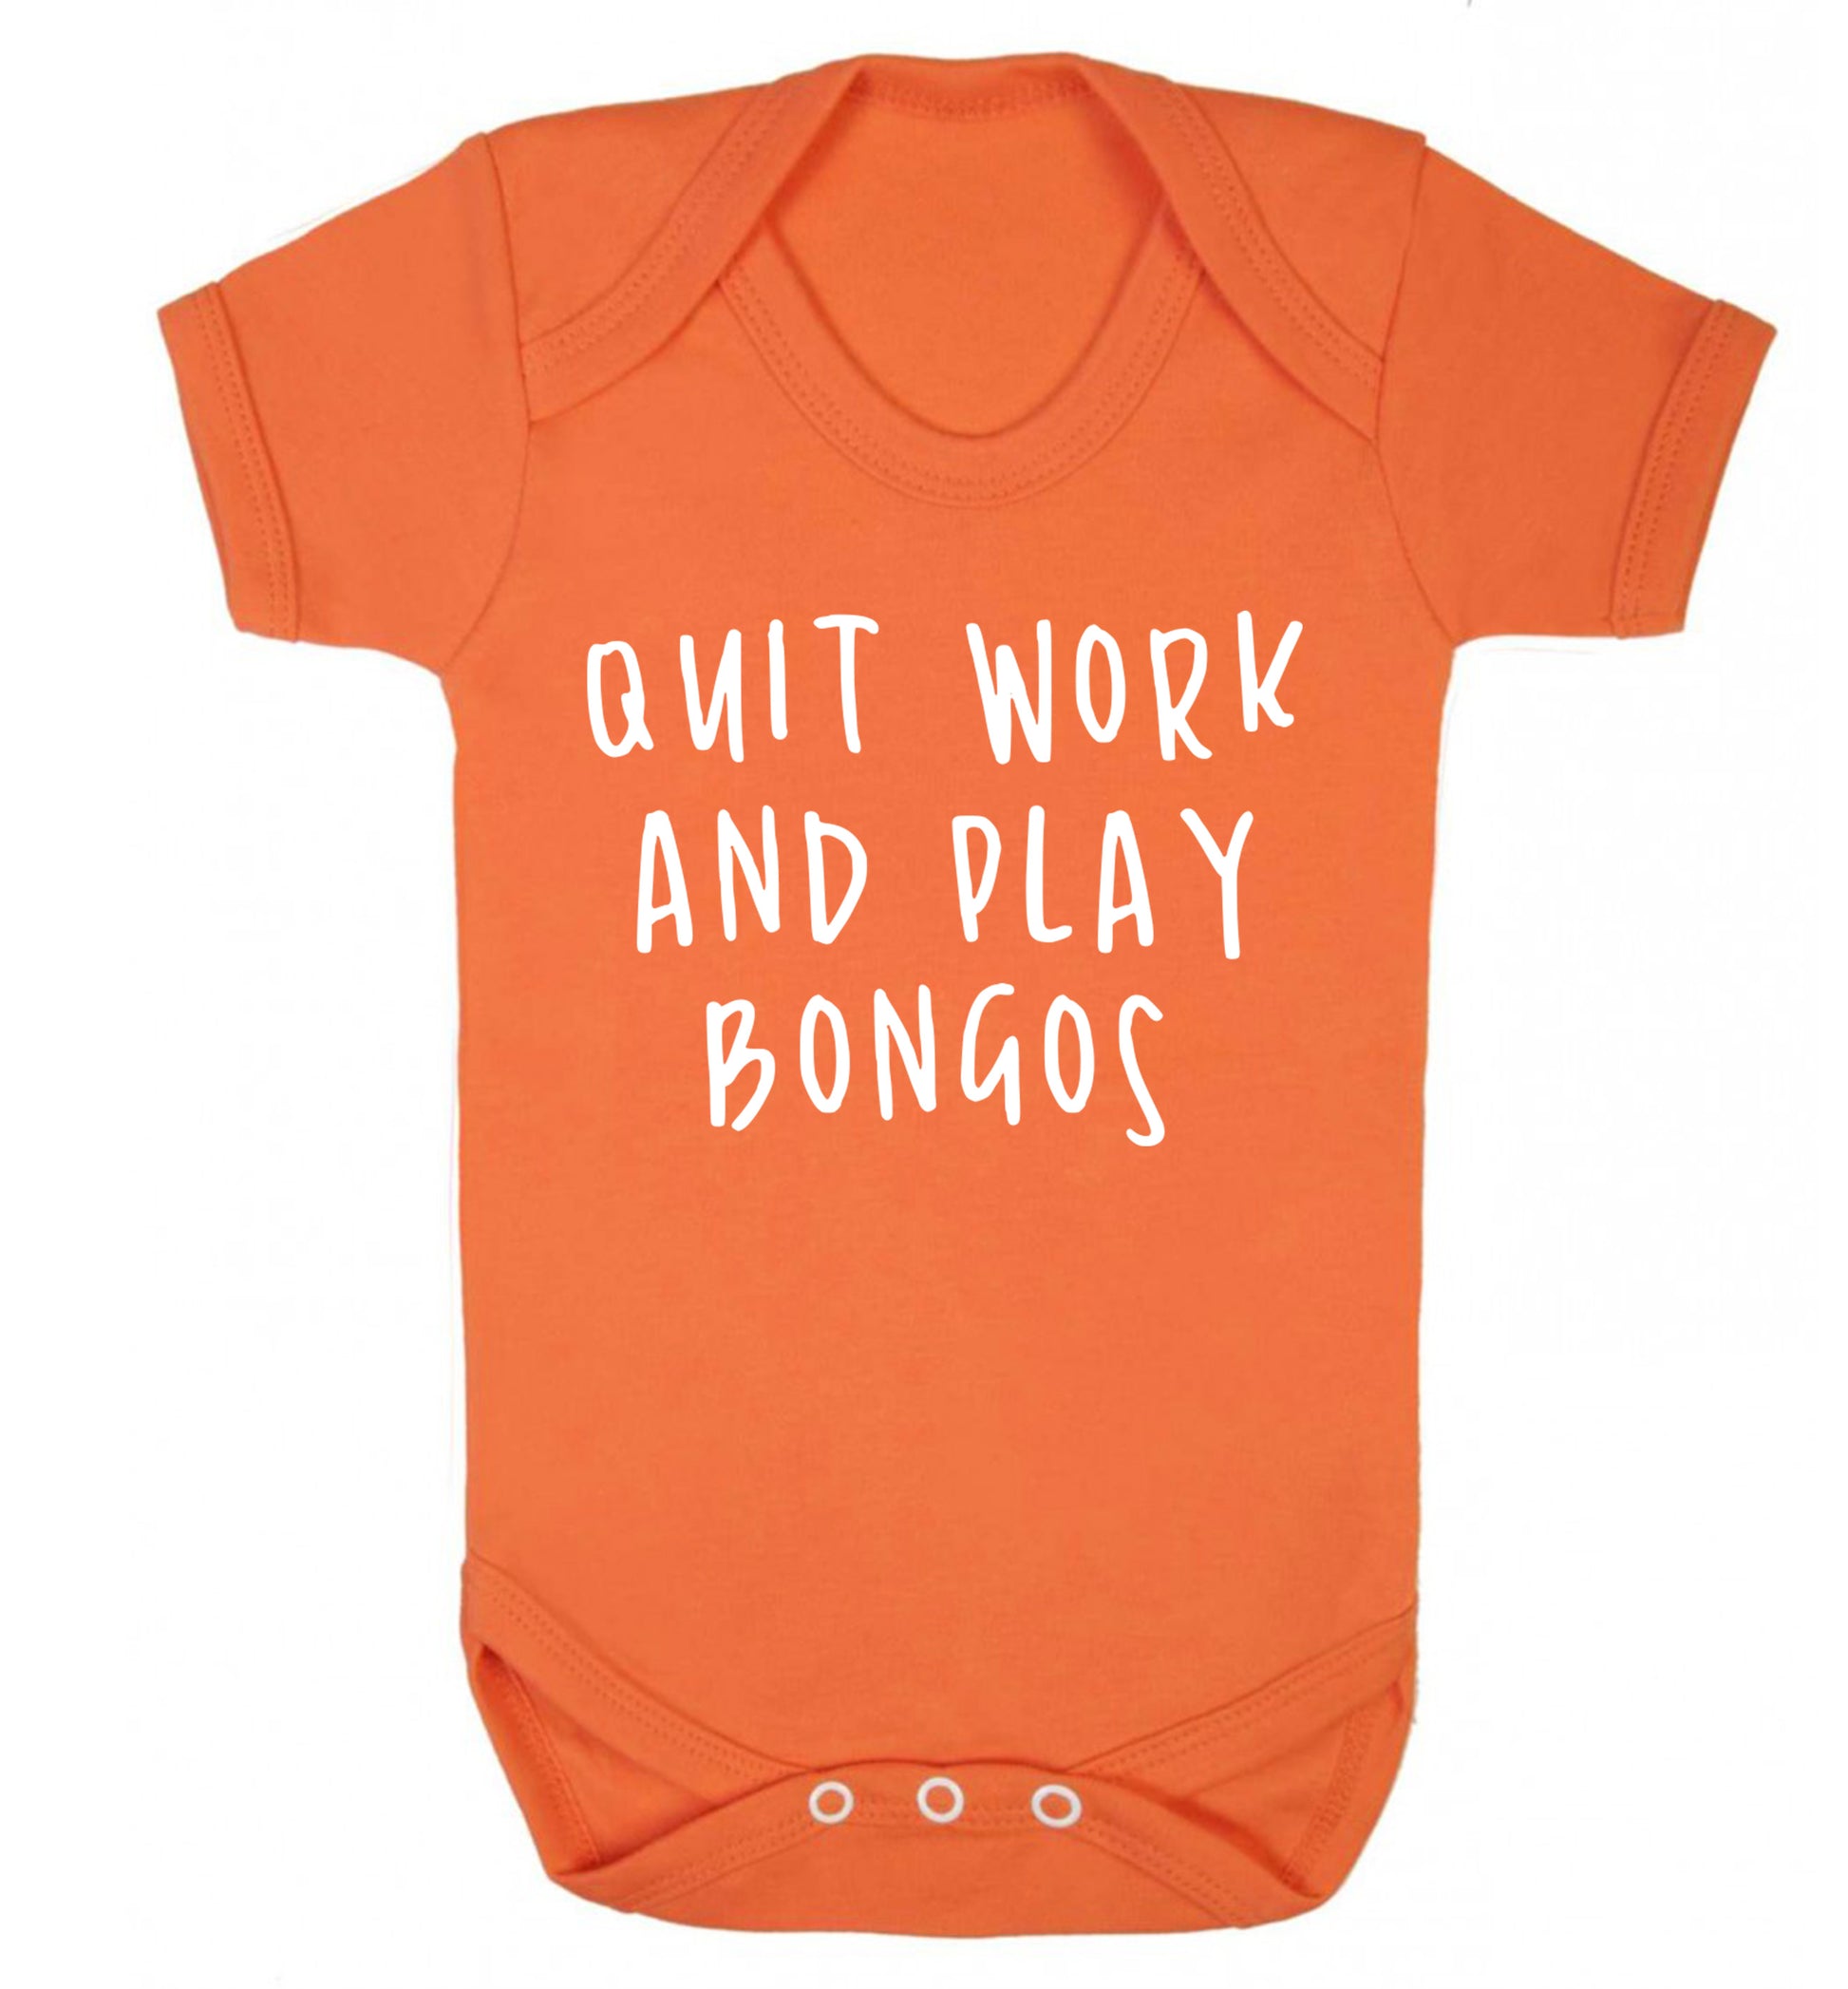 Quit work and play bongos Baby Vest orange 18-24 months